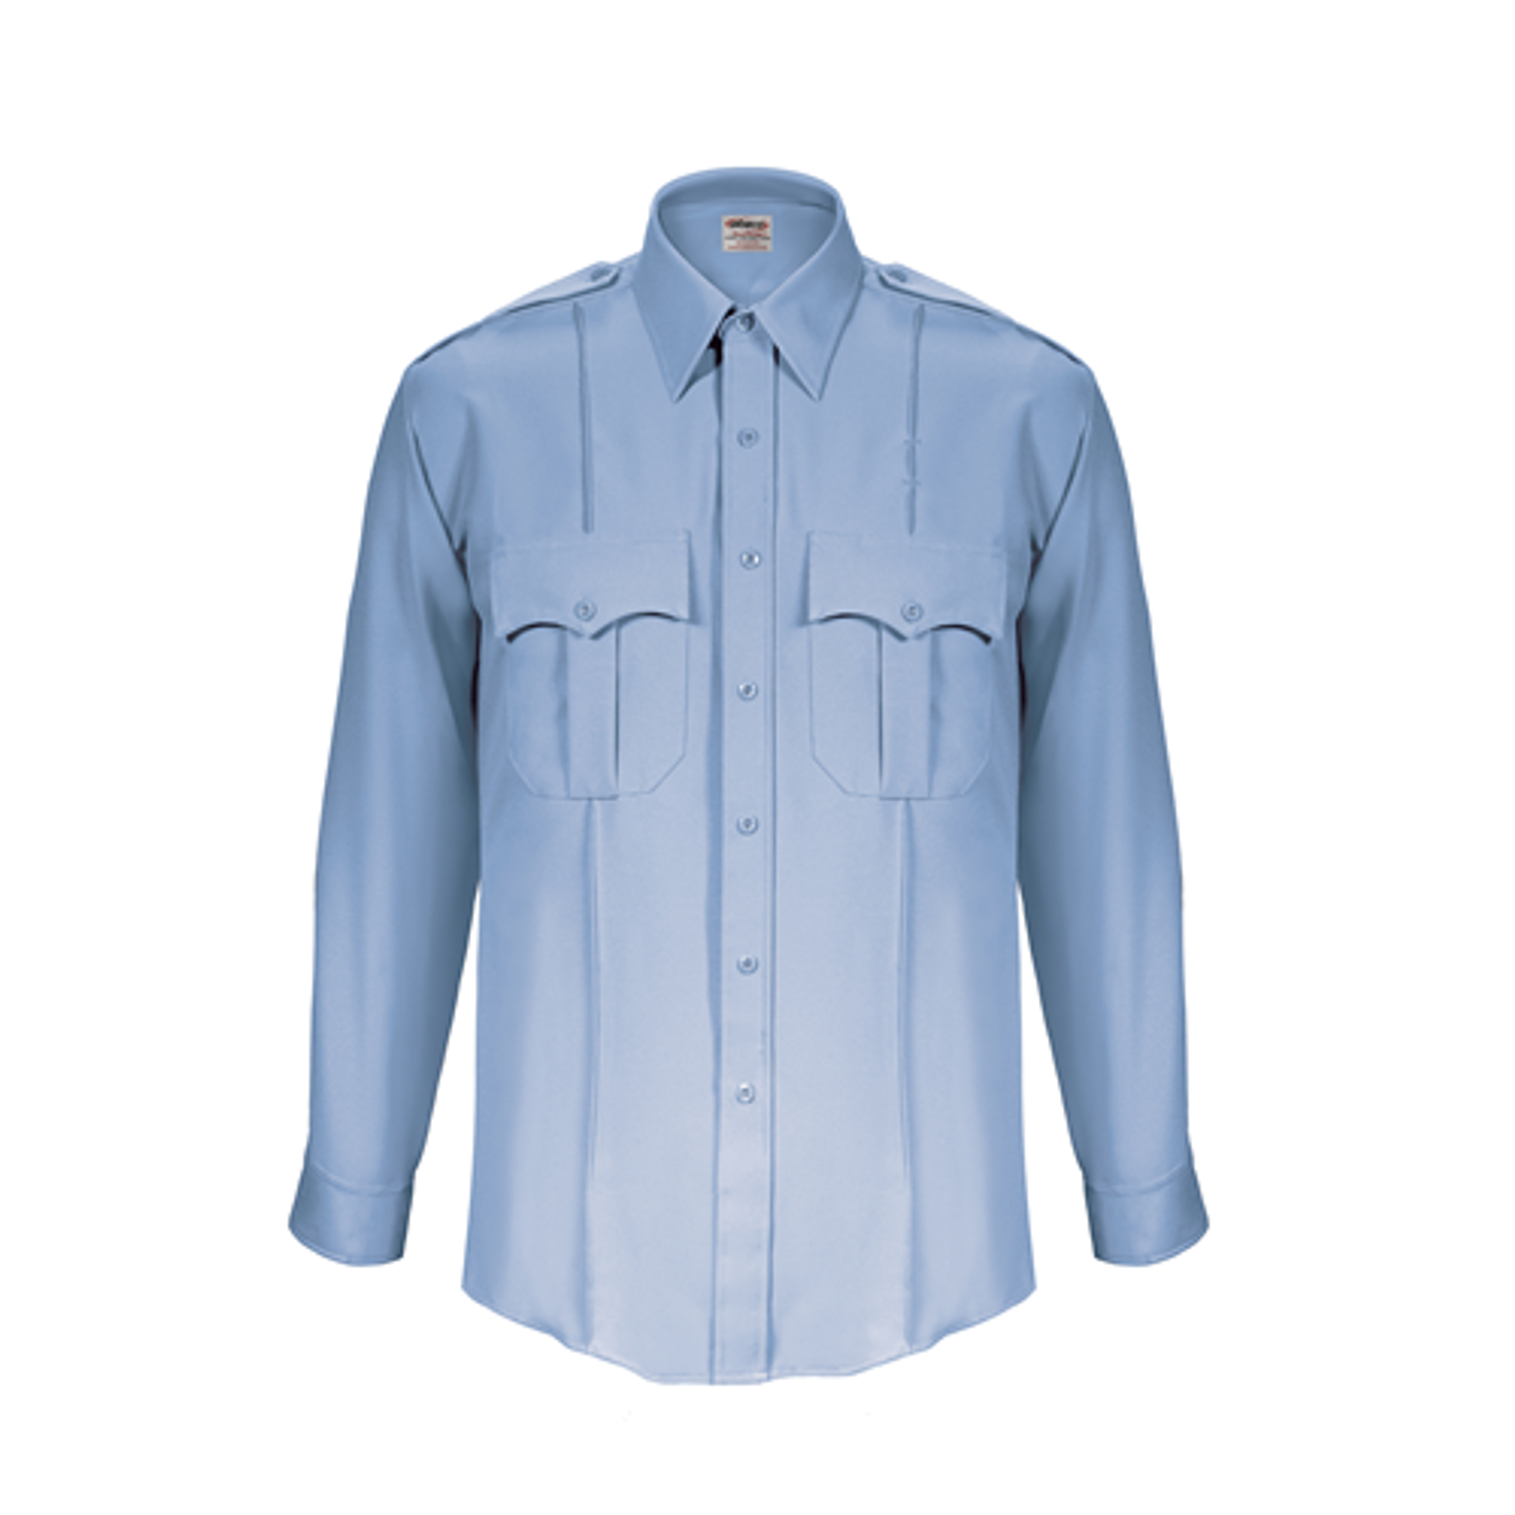 Textrop2 Long Sleeve Shirt - KRELB-313N-16.5-35